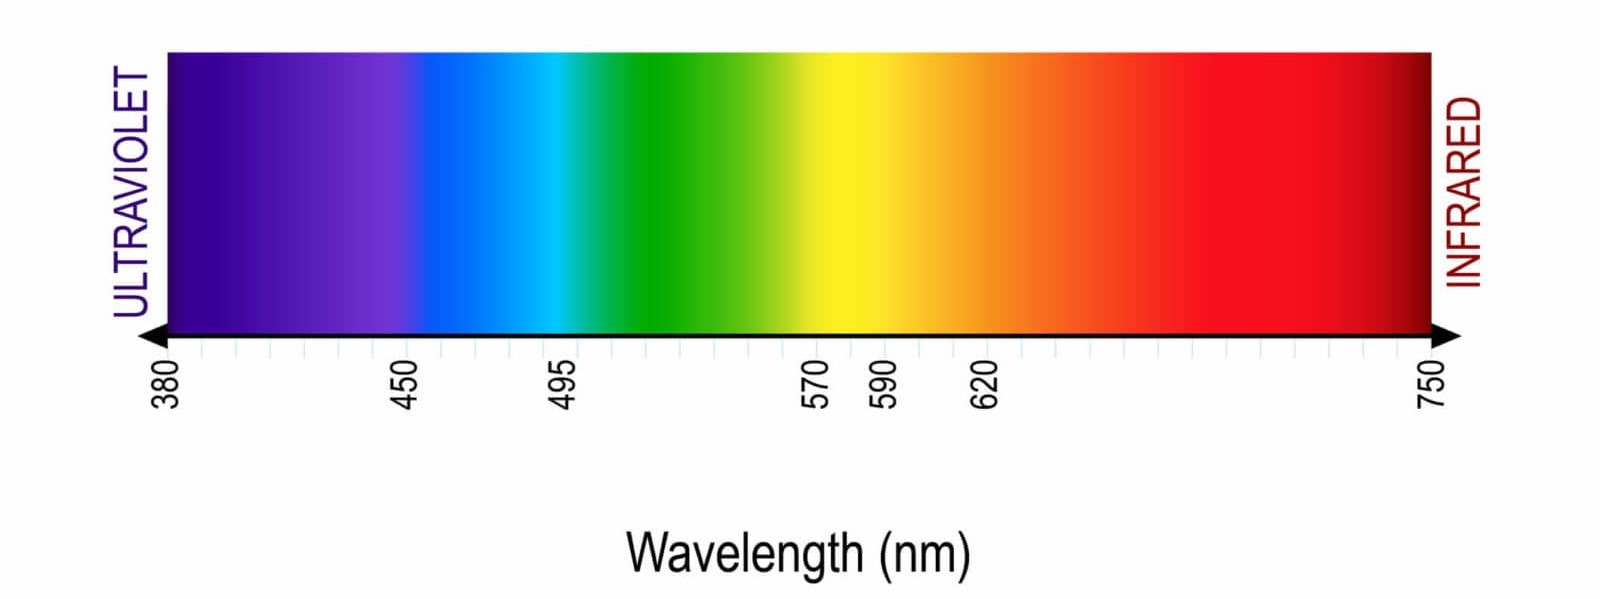 LED light color wavelength spectrum from ultraviolet to infrared.